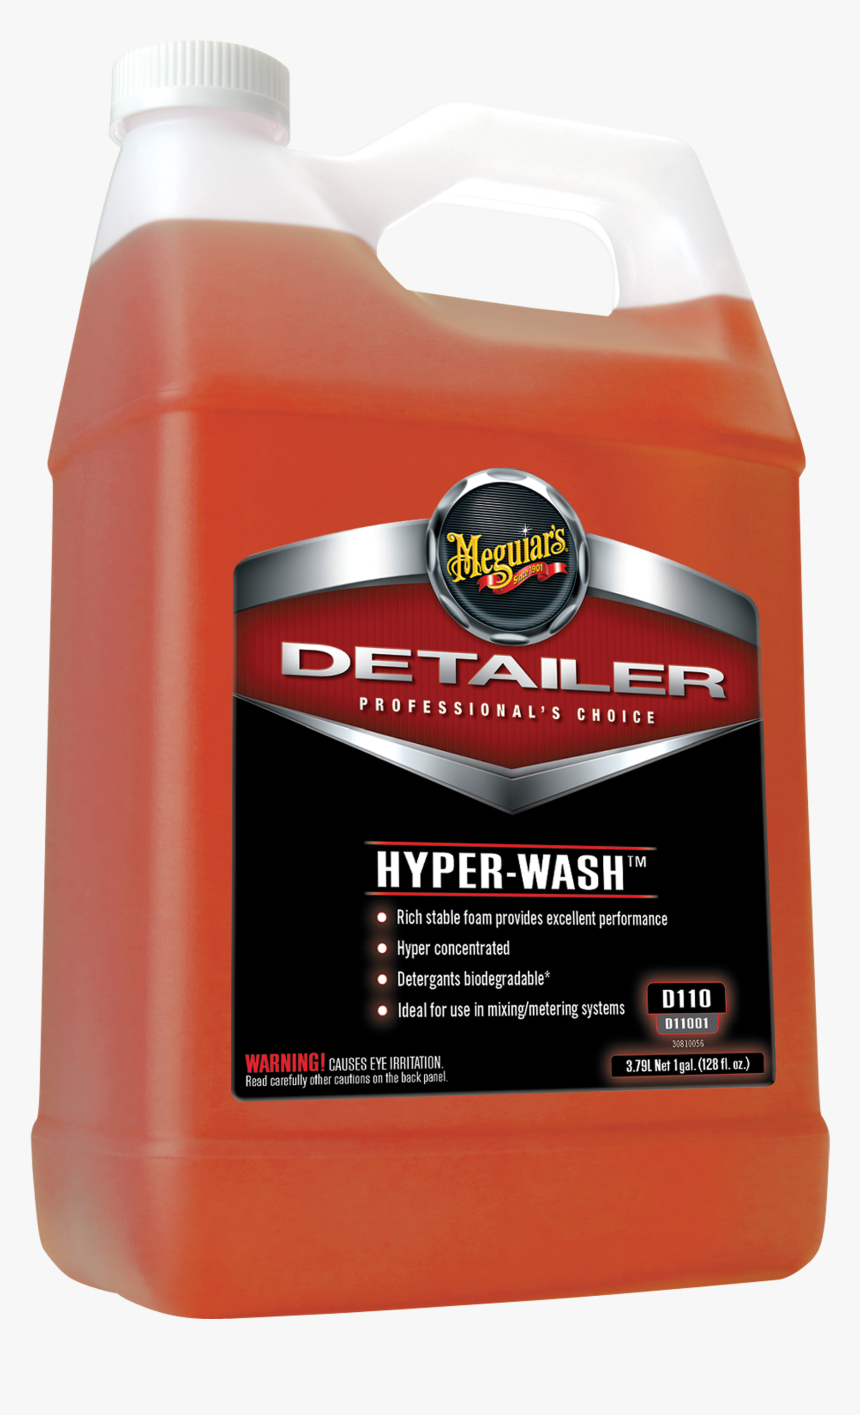 D110 Detailer Hyper-wash™, 1 Gallon - Meguiars Hyper Wash, HD Png Download, Free Download